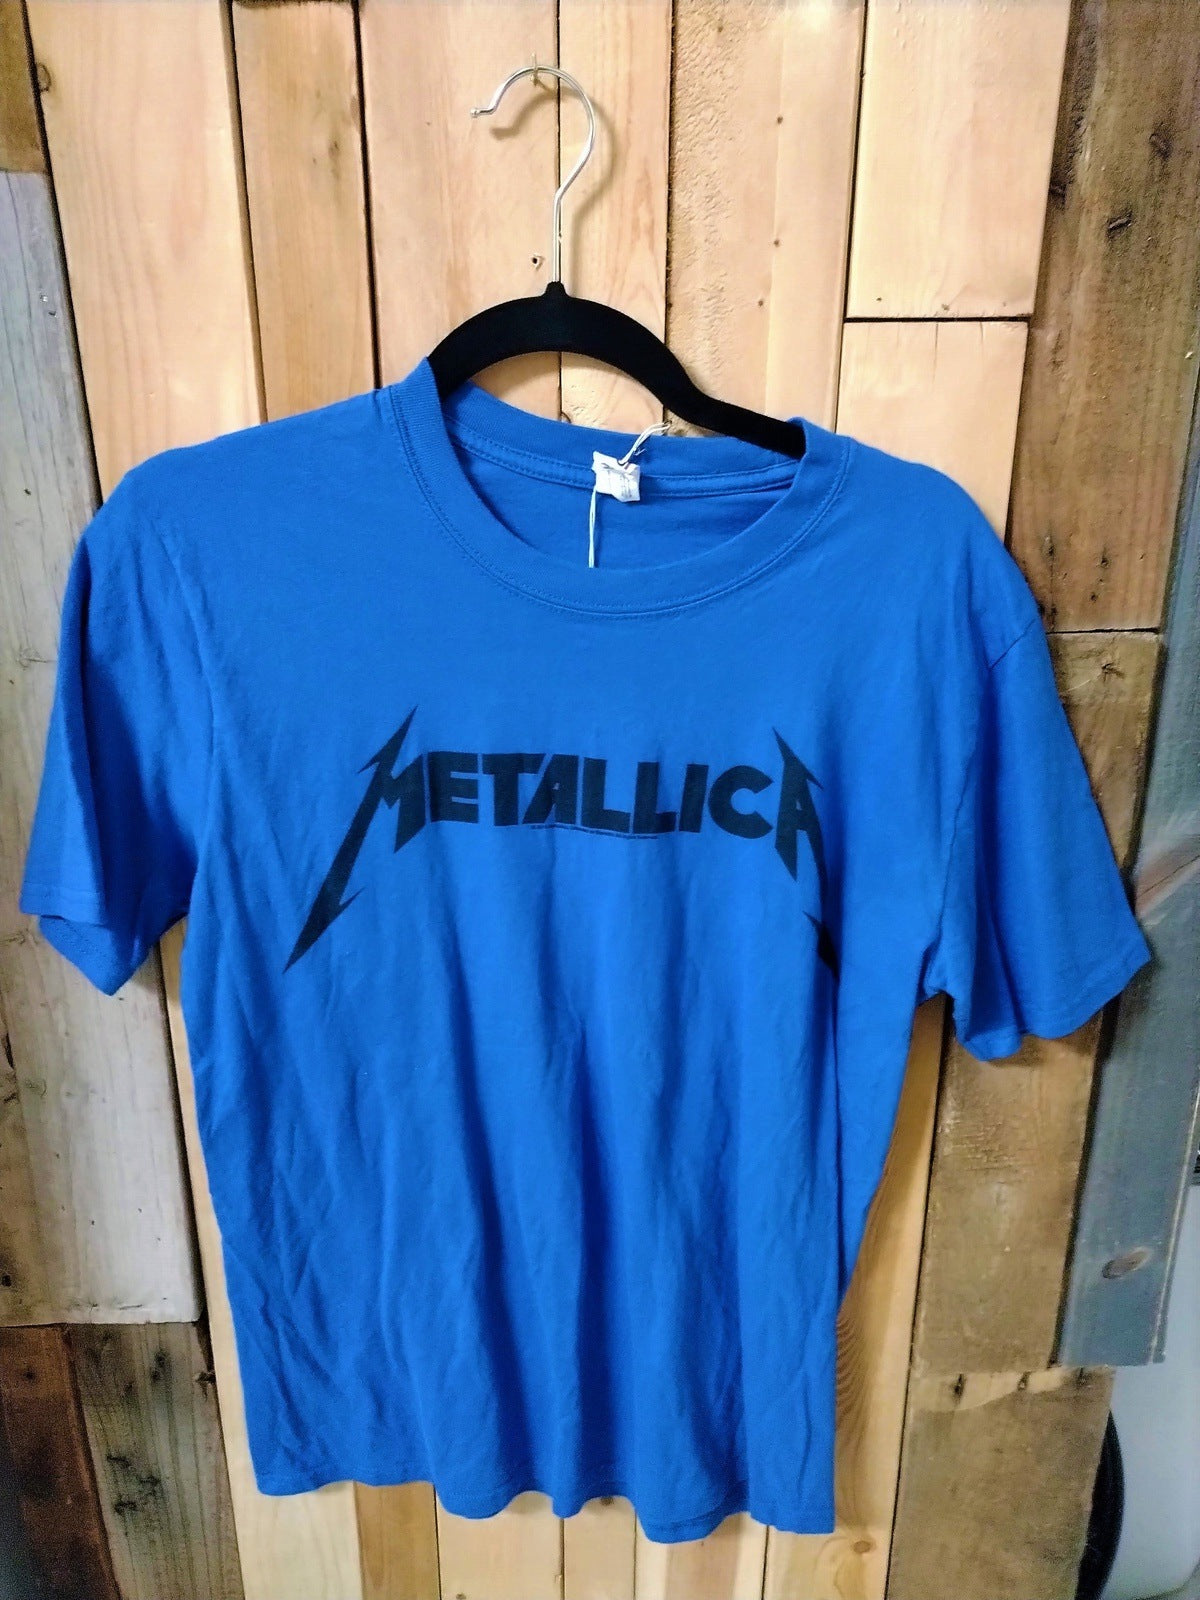 Metallica Size Medium Tee Shirt